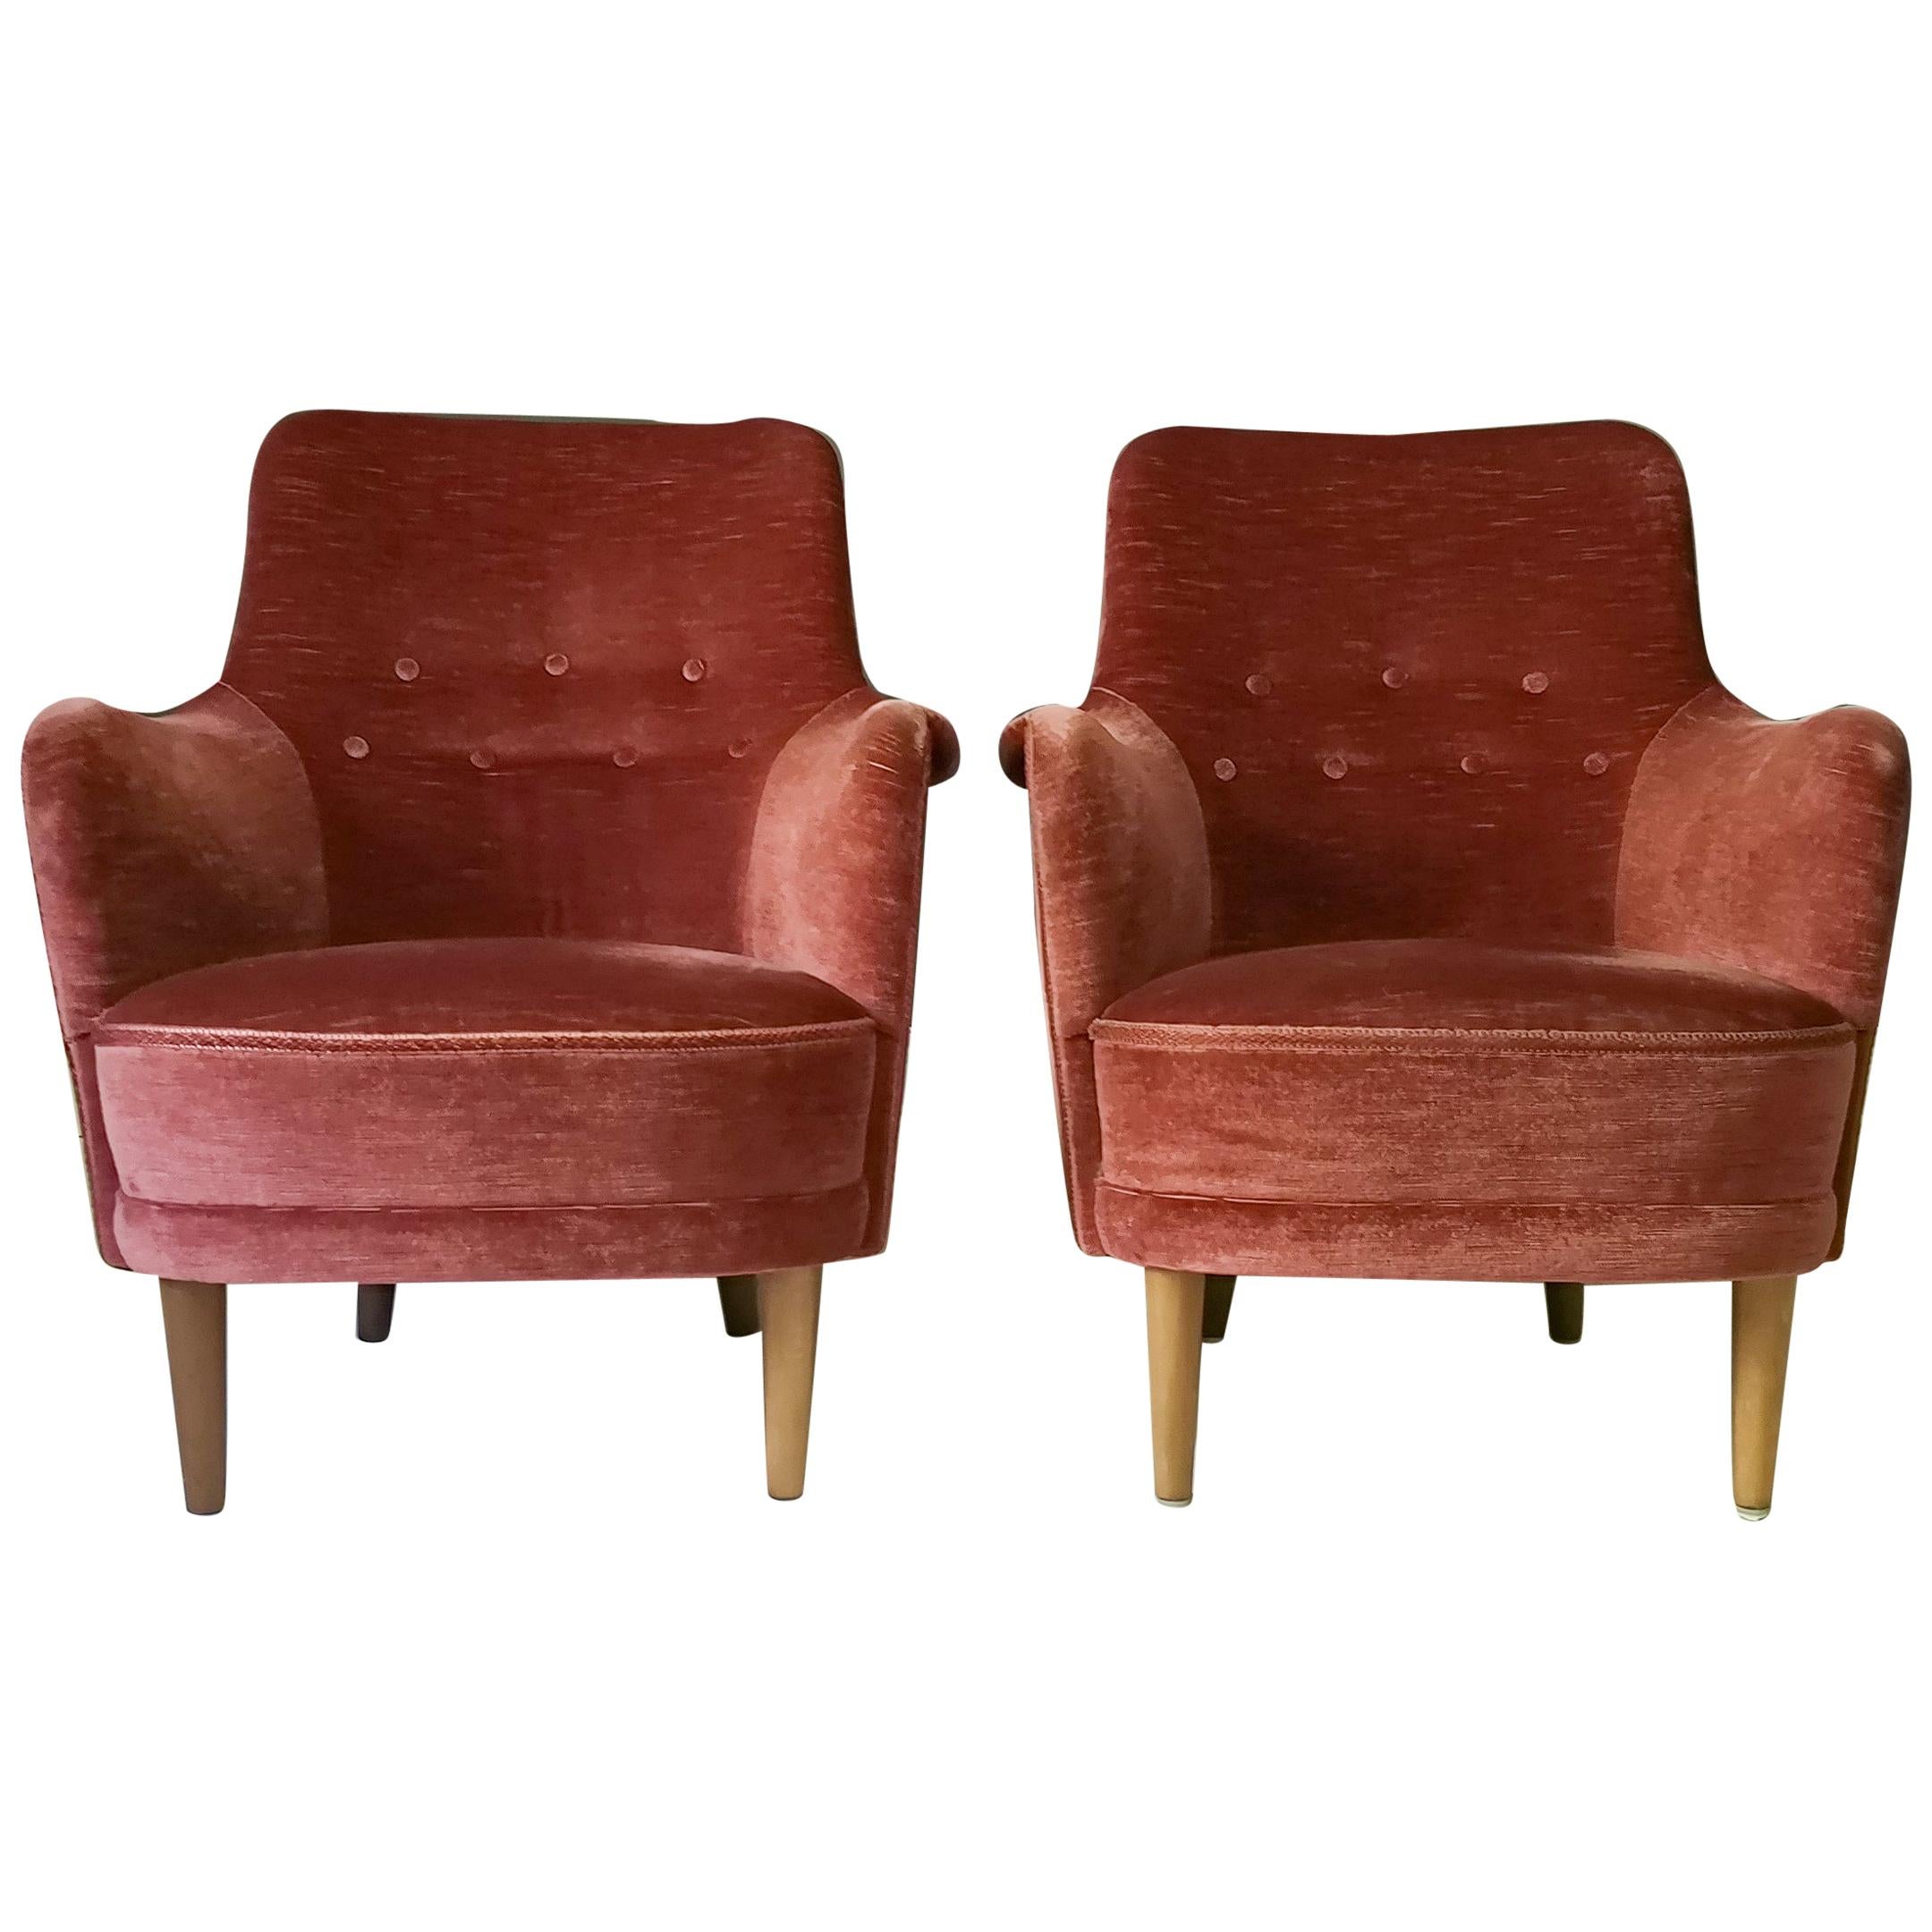 Rare Set of 2 Carl Malmsten "Samsas" Chairs, Sweden, 1960s